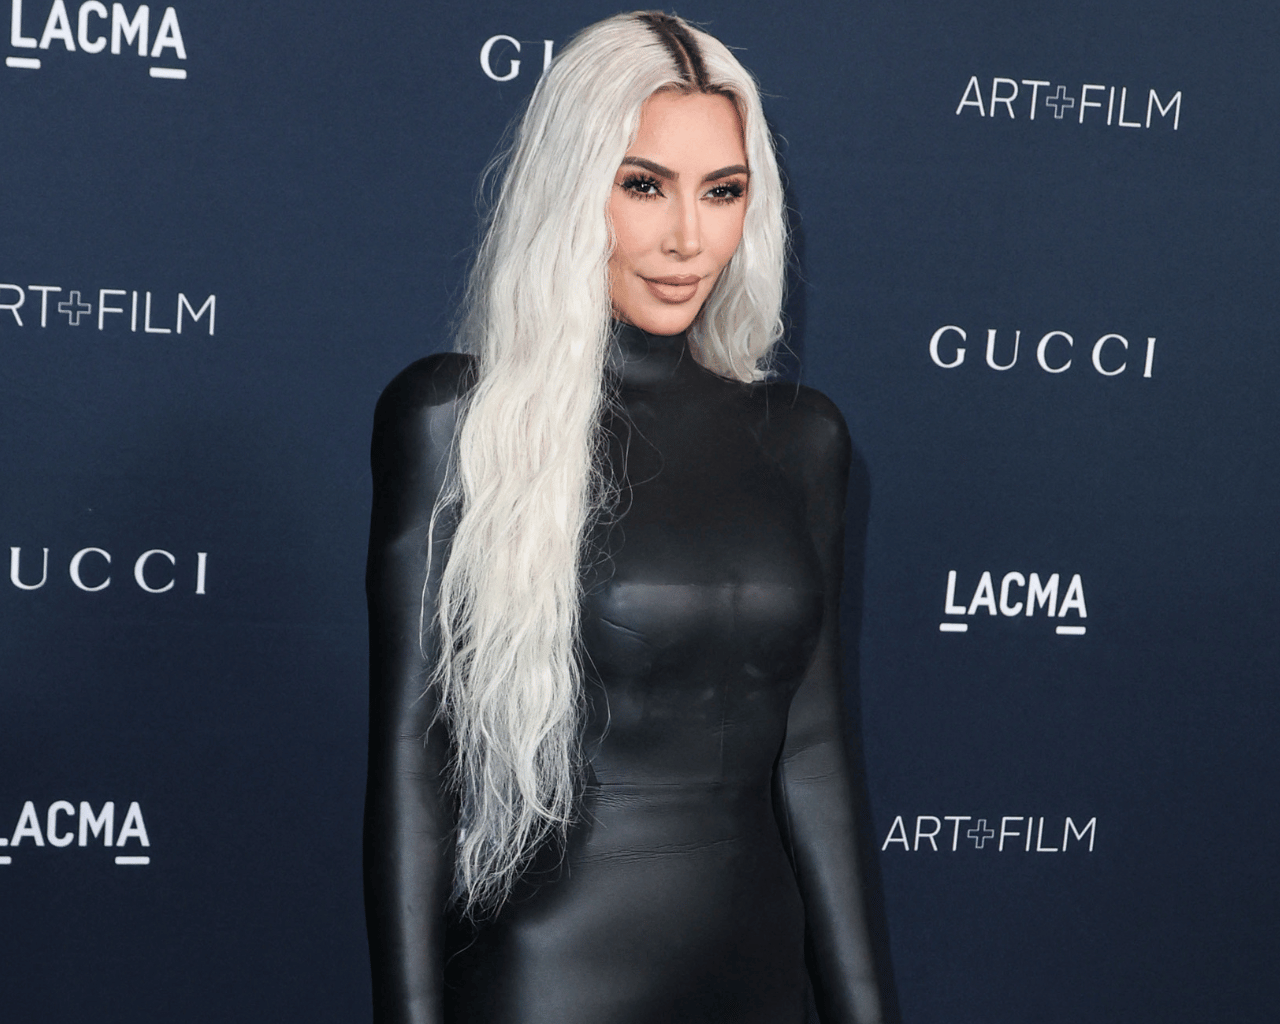 Celebrities Love: House of CB's Rivera Latex Dress – Fashion Bomb